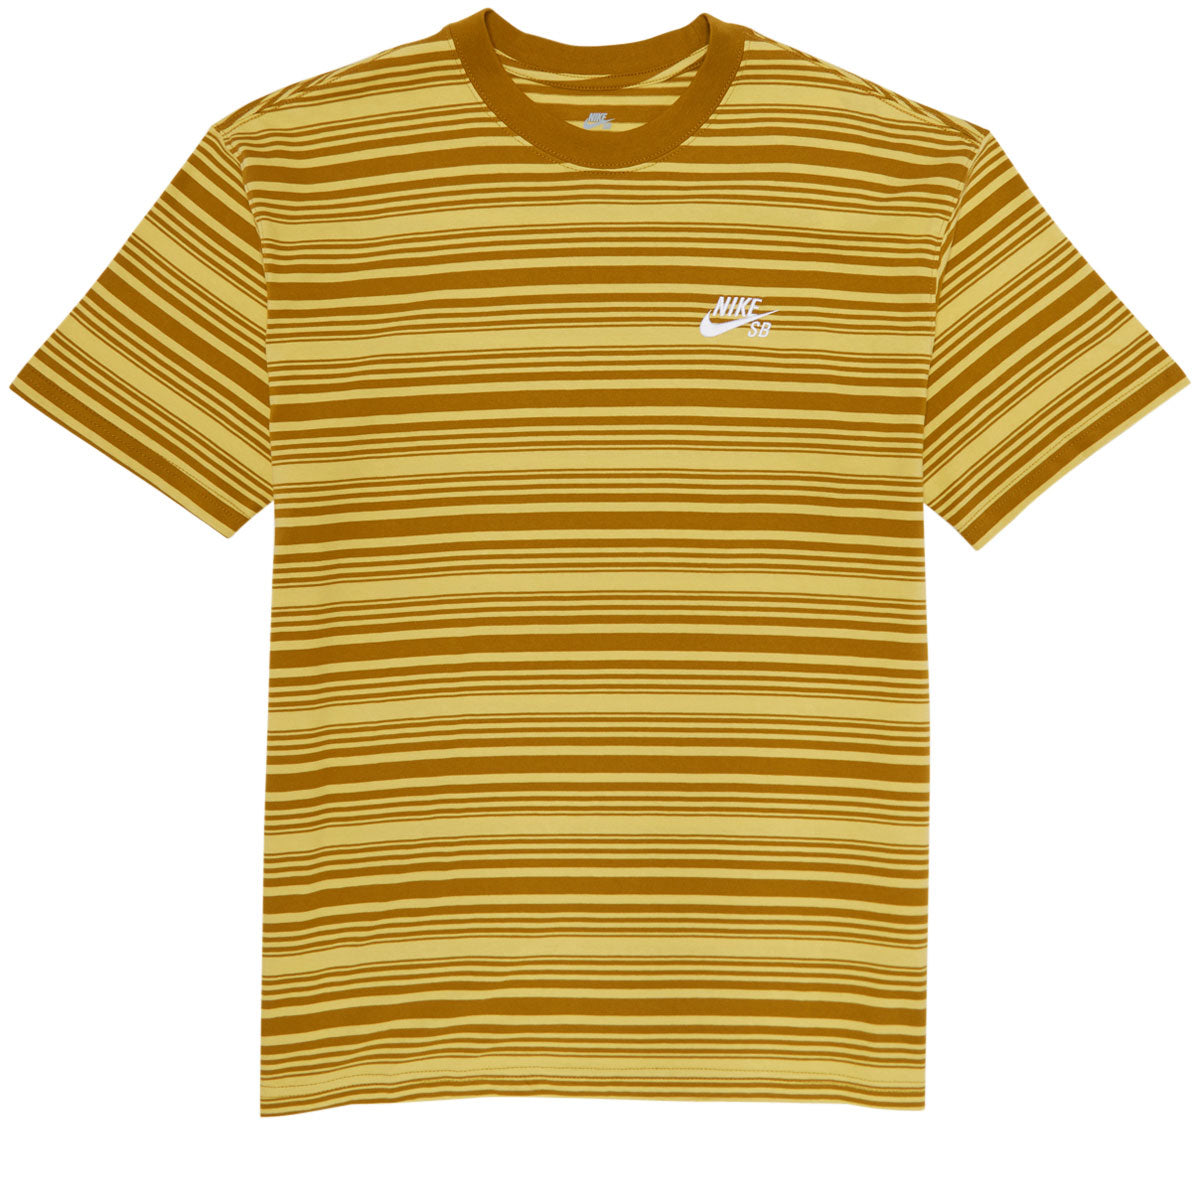 Nike SB Striped Skate T-Shirt - Bronzine image 1